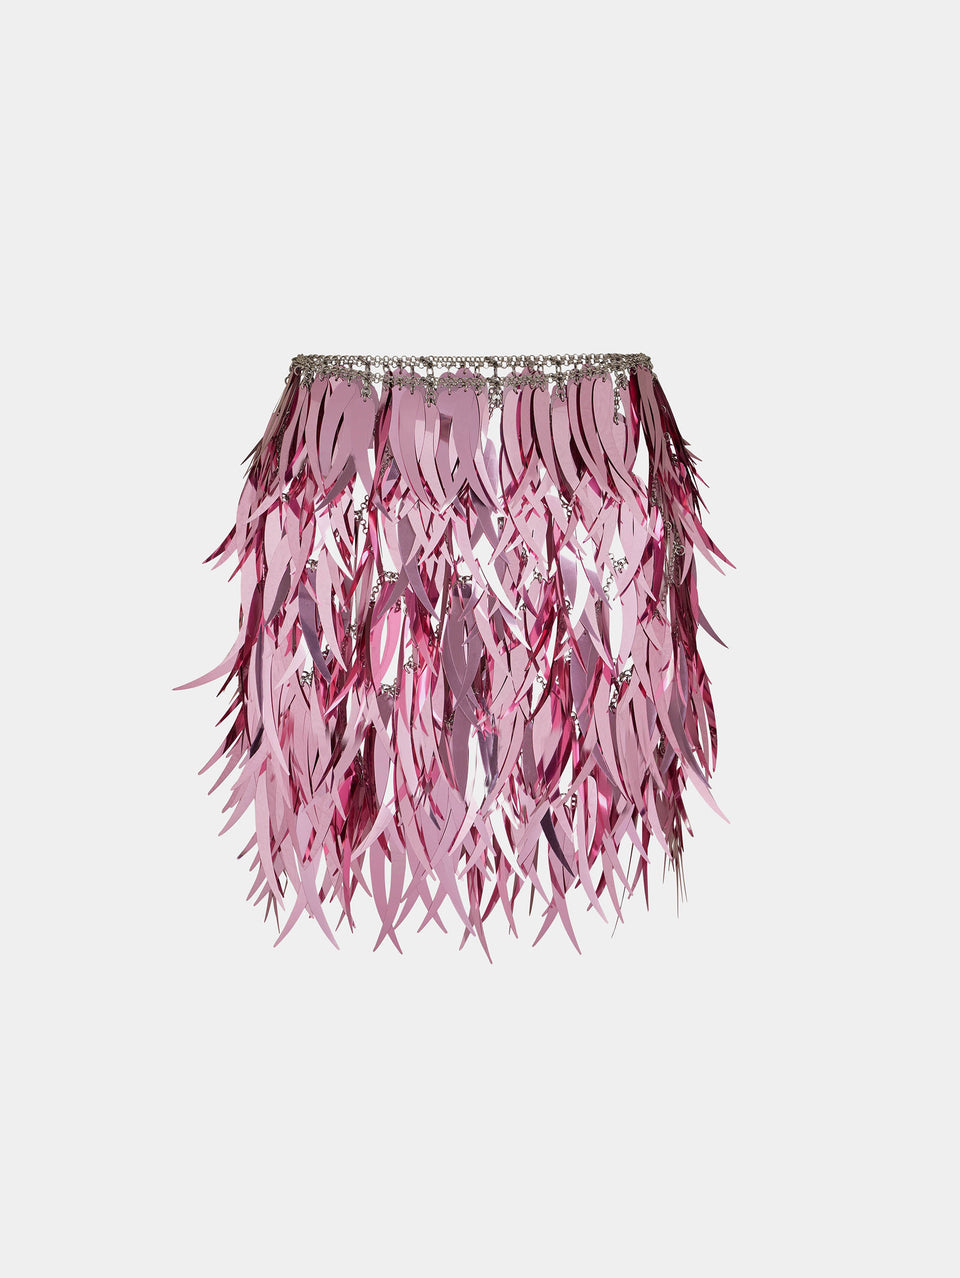 Pink skirt in metallic feathers